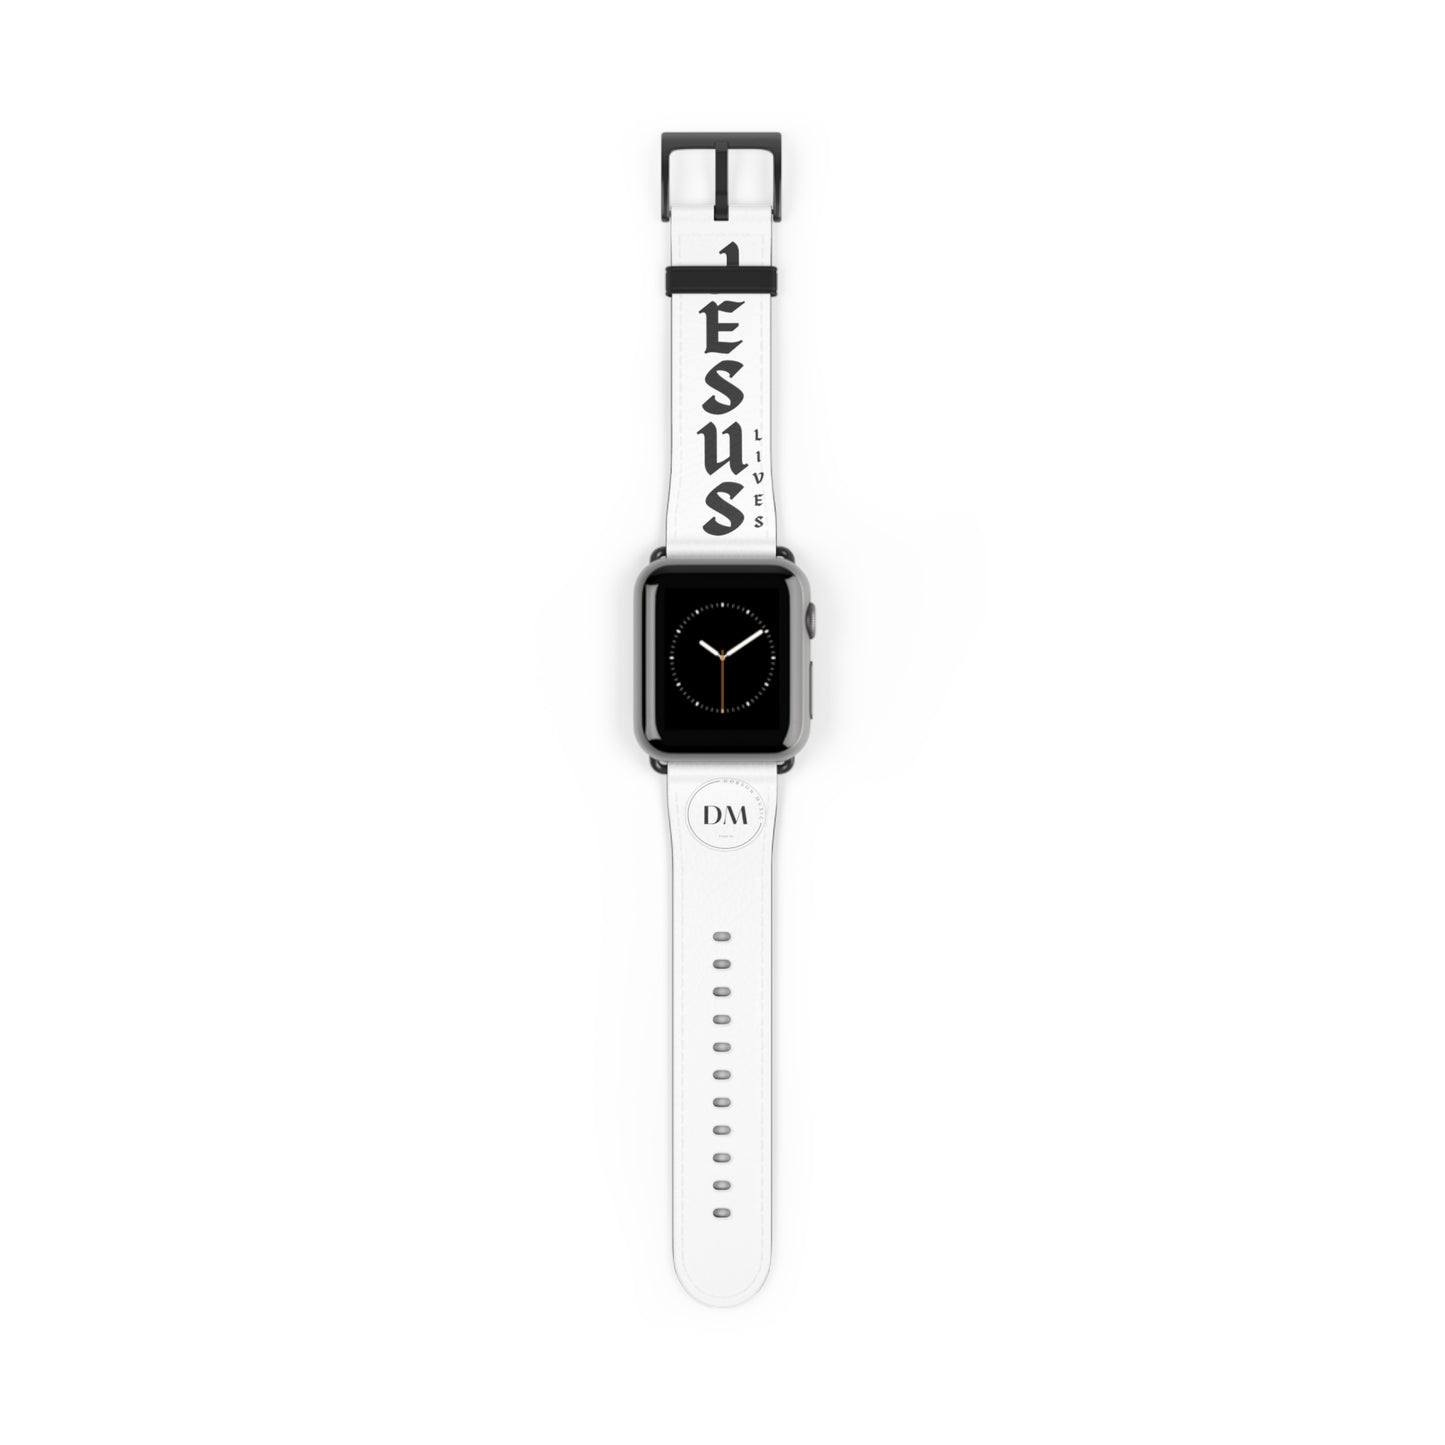 DM - Jesus Lives Apple Watch Band